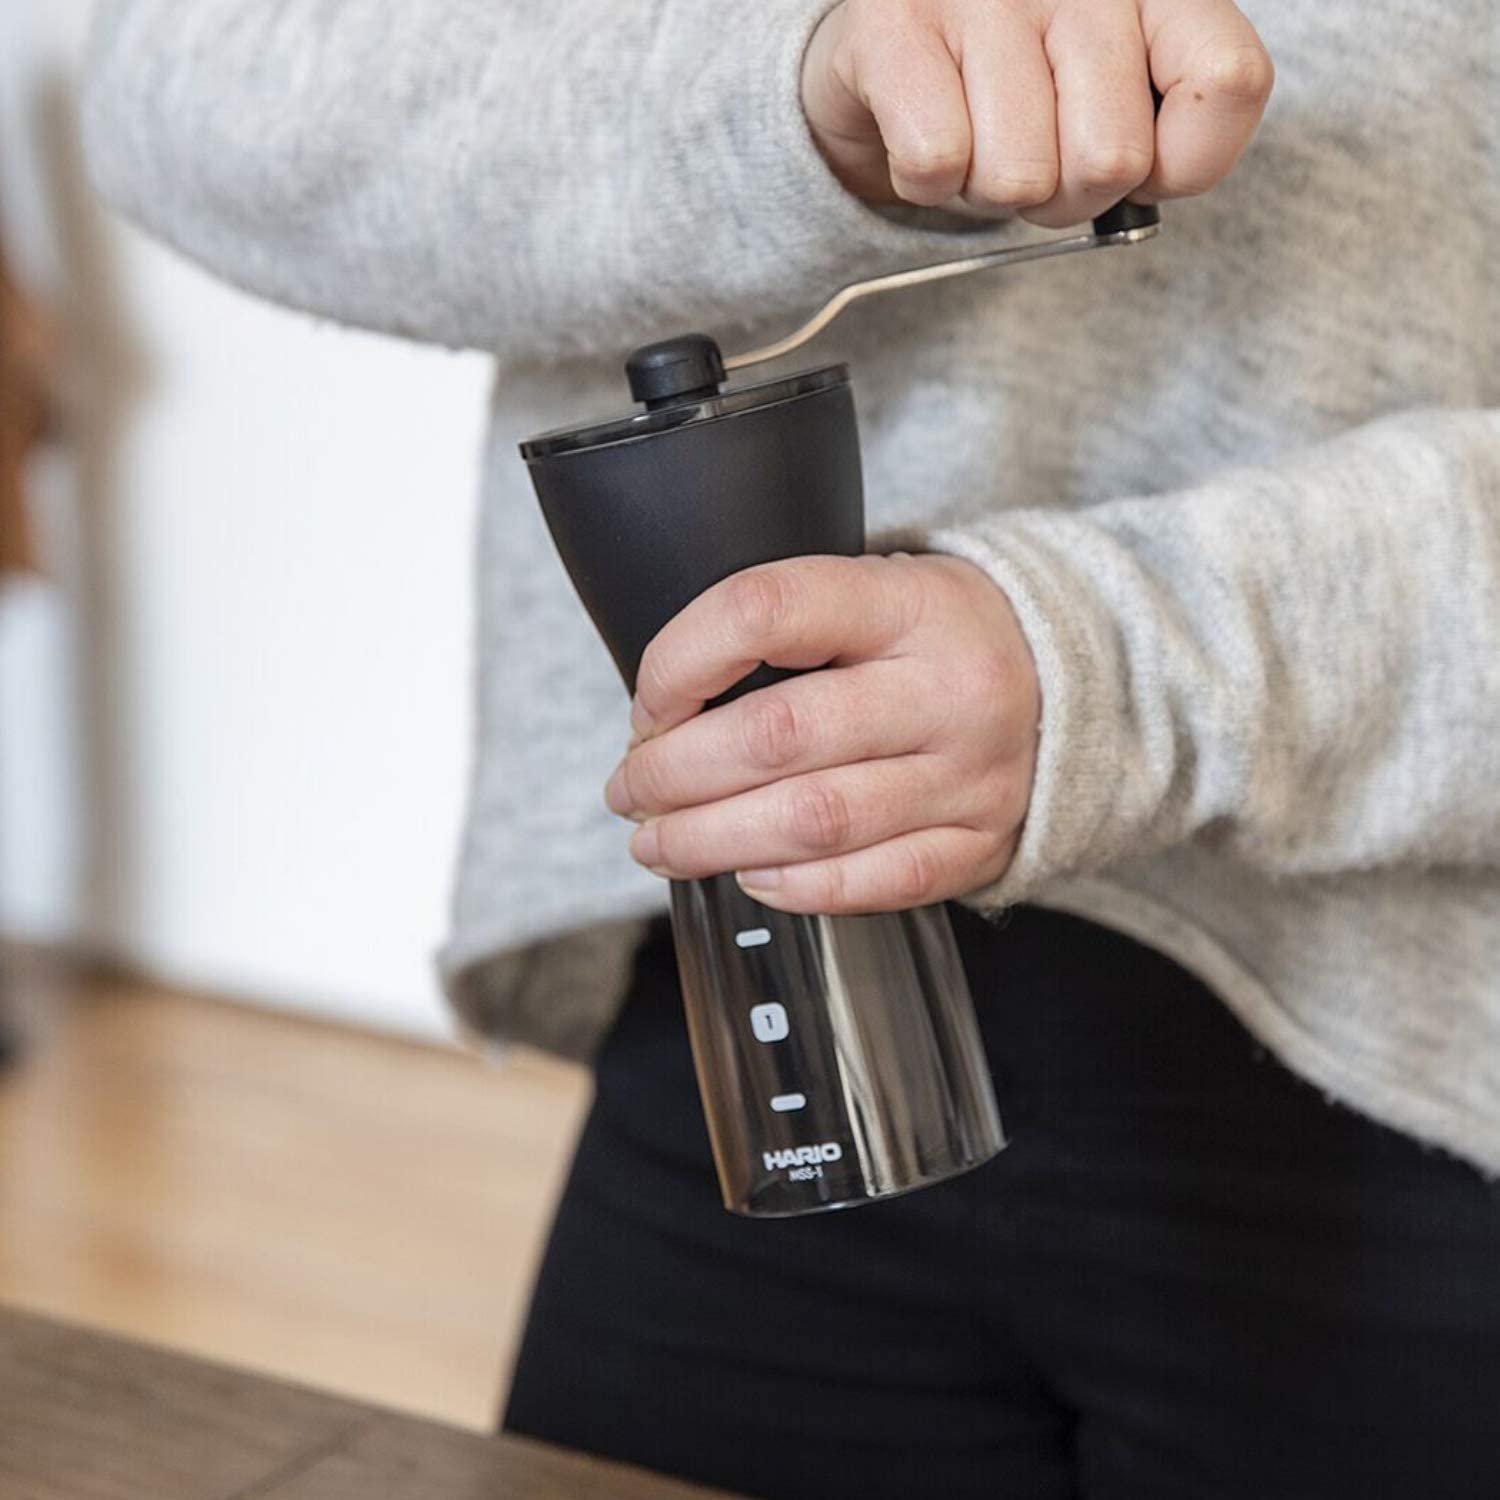 Hario 陶瓷咖啡研磨机 Mini Slim Plus 咖啡研磨机